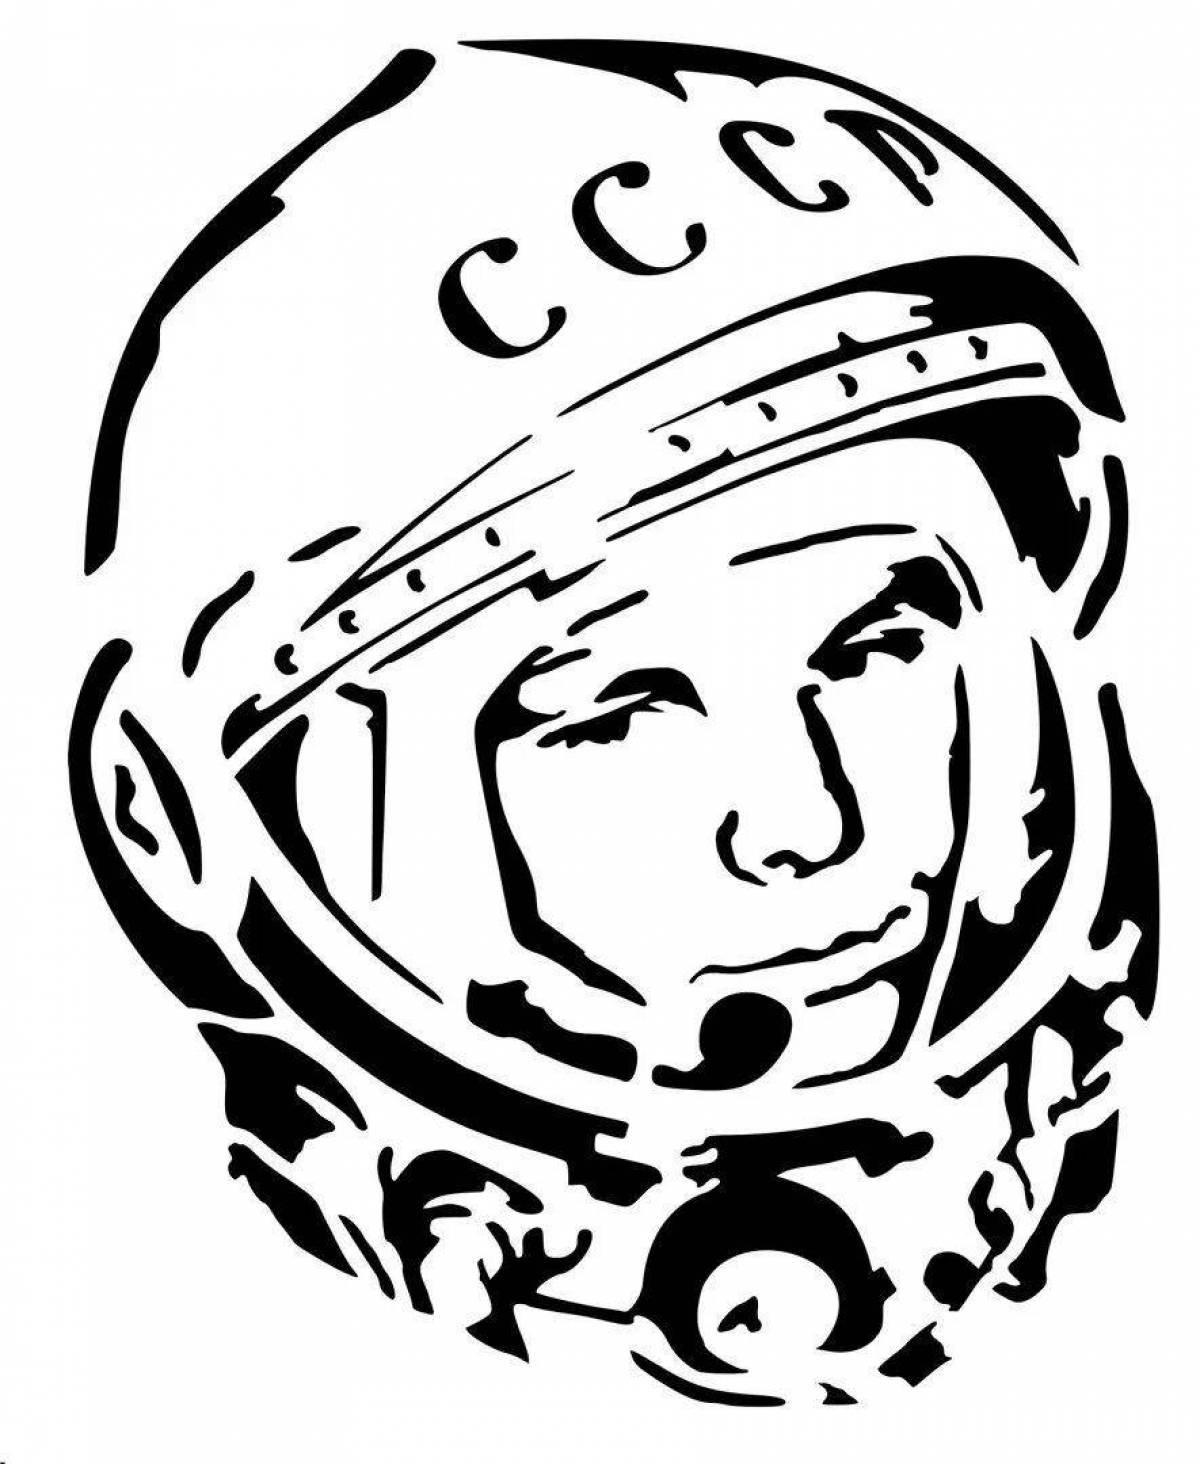 Yuri Gagarin's brilliant coloring